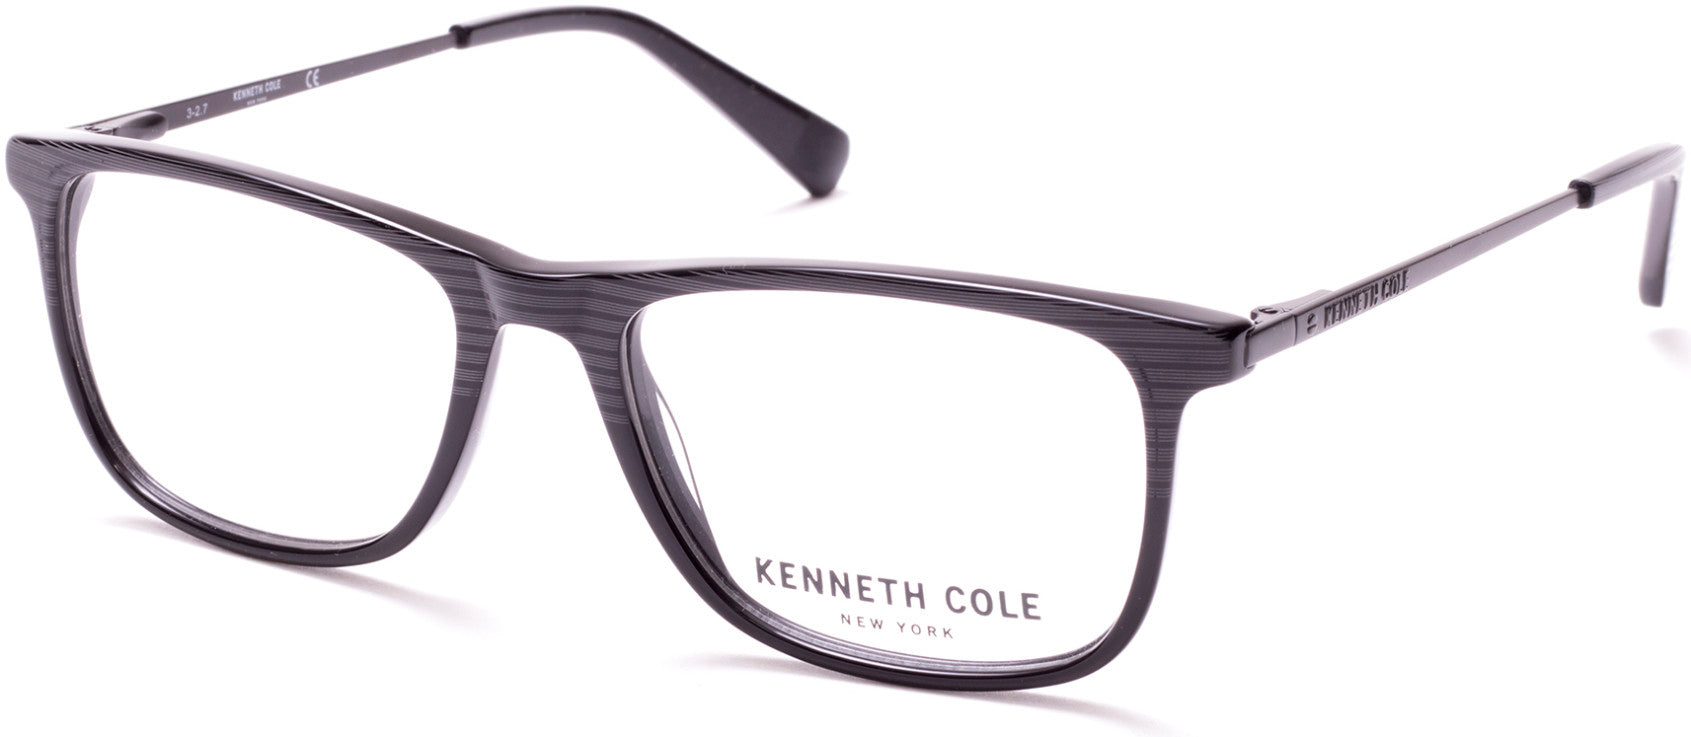 Kenneth Cole New York,Kenneth Cole Reaction KC0277 Geometric Eyeglasses 001-001 - Shiny Black